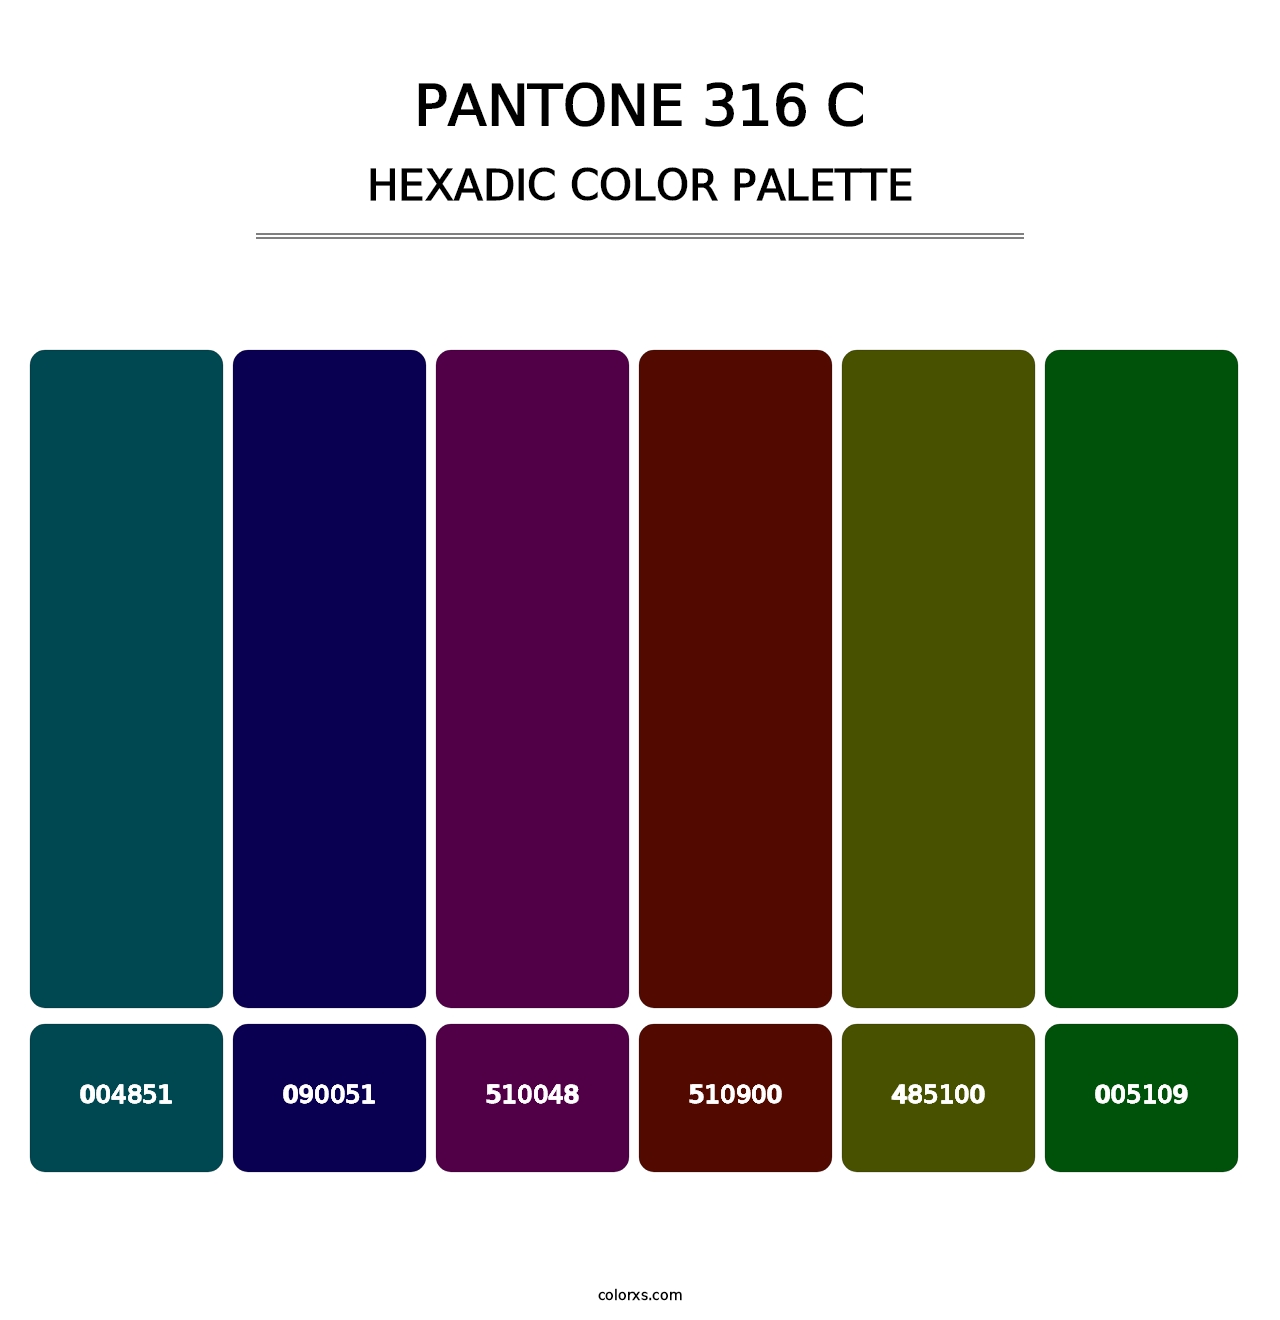 PANTONE 316 C - Hexadic Color Palette